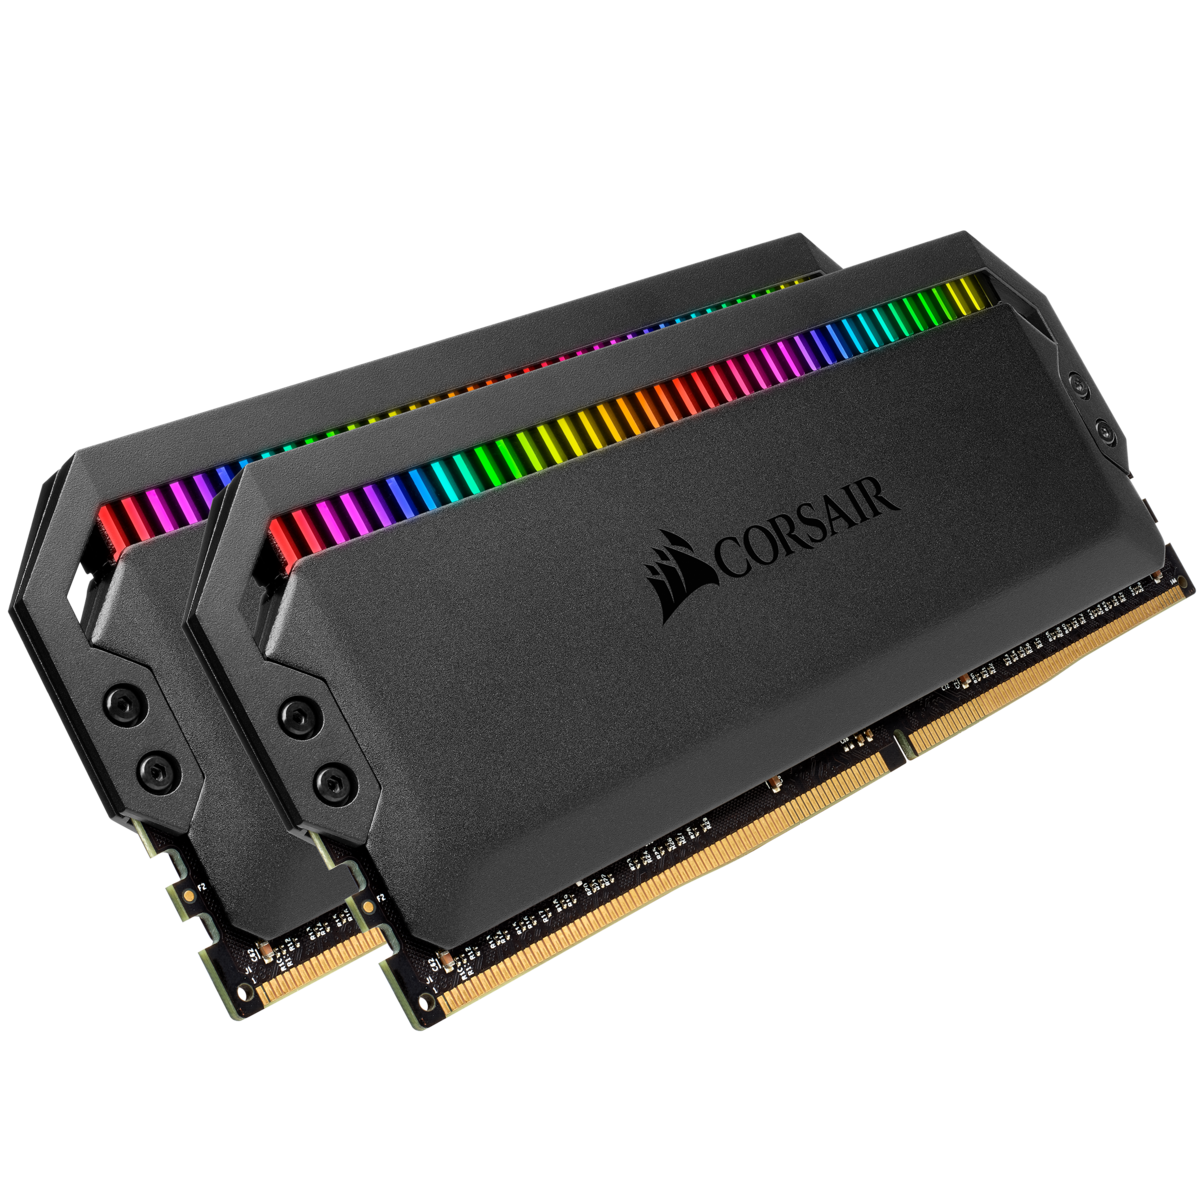 Corsair Dominator Platinum RGB 32GB DDR4-3466 Kit (2x16GB), CL16